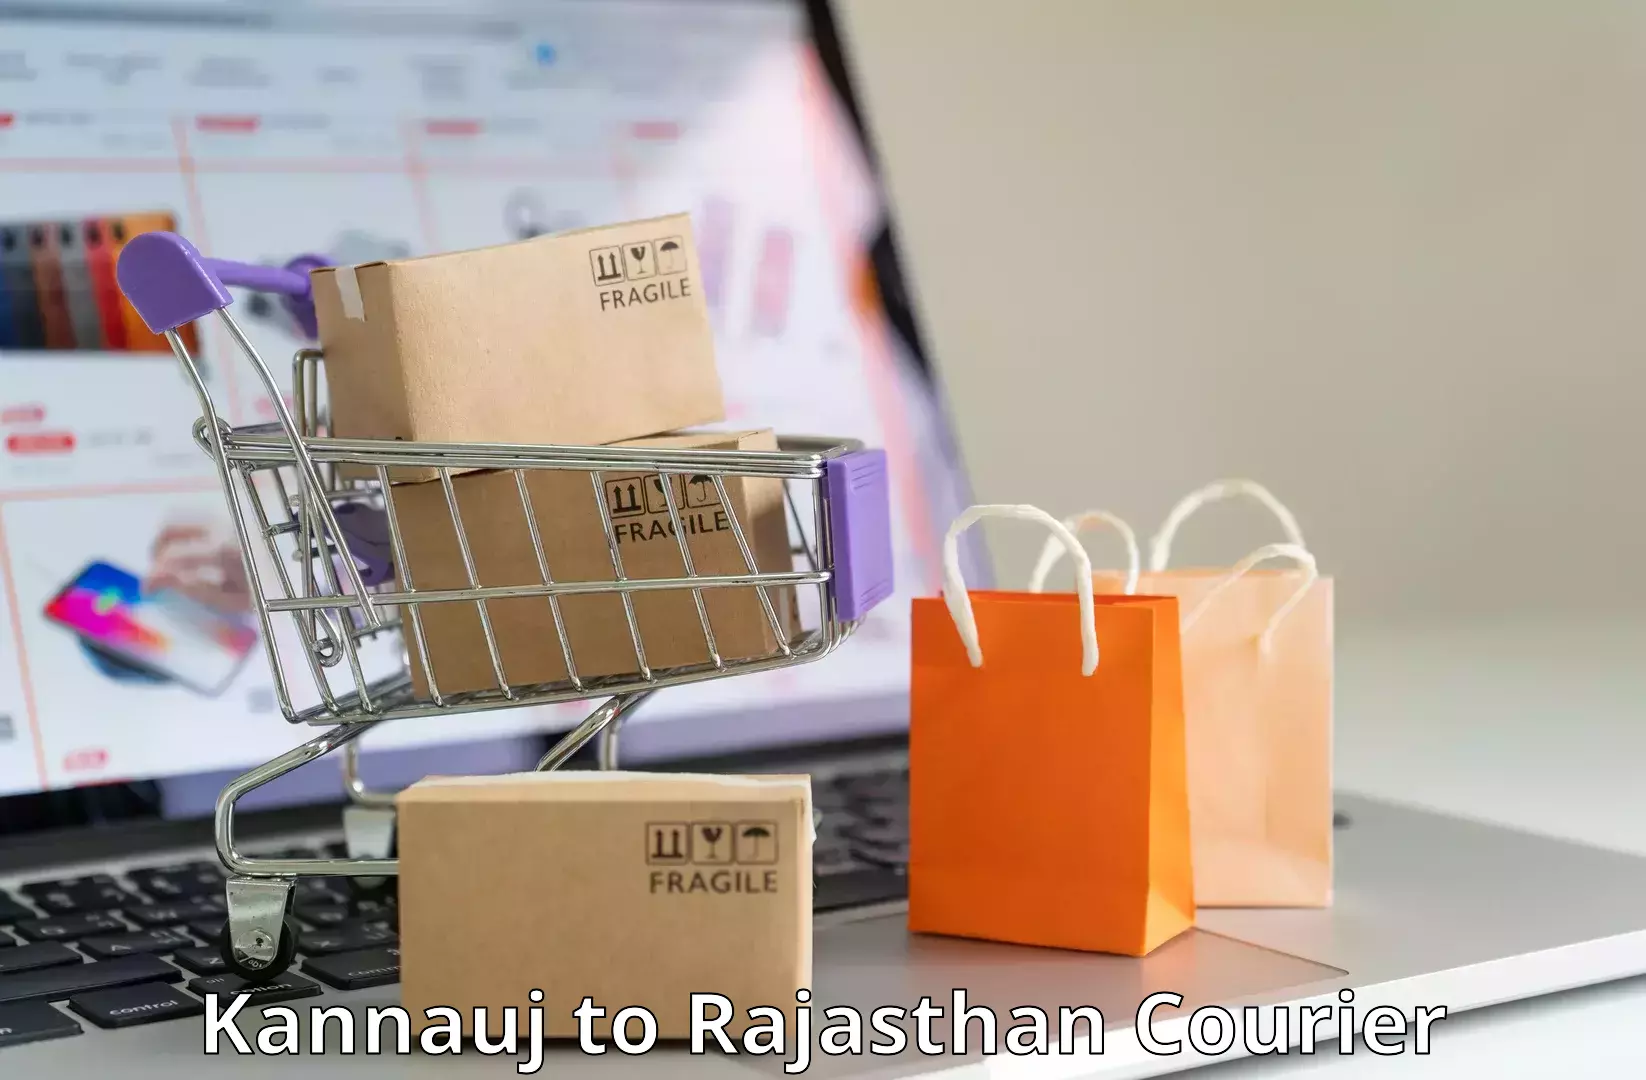 Next-generation courier services Kannauj to Jaipur